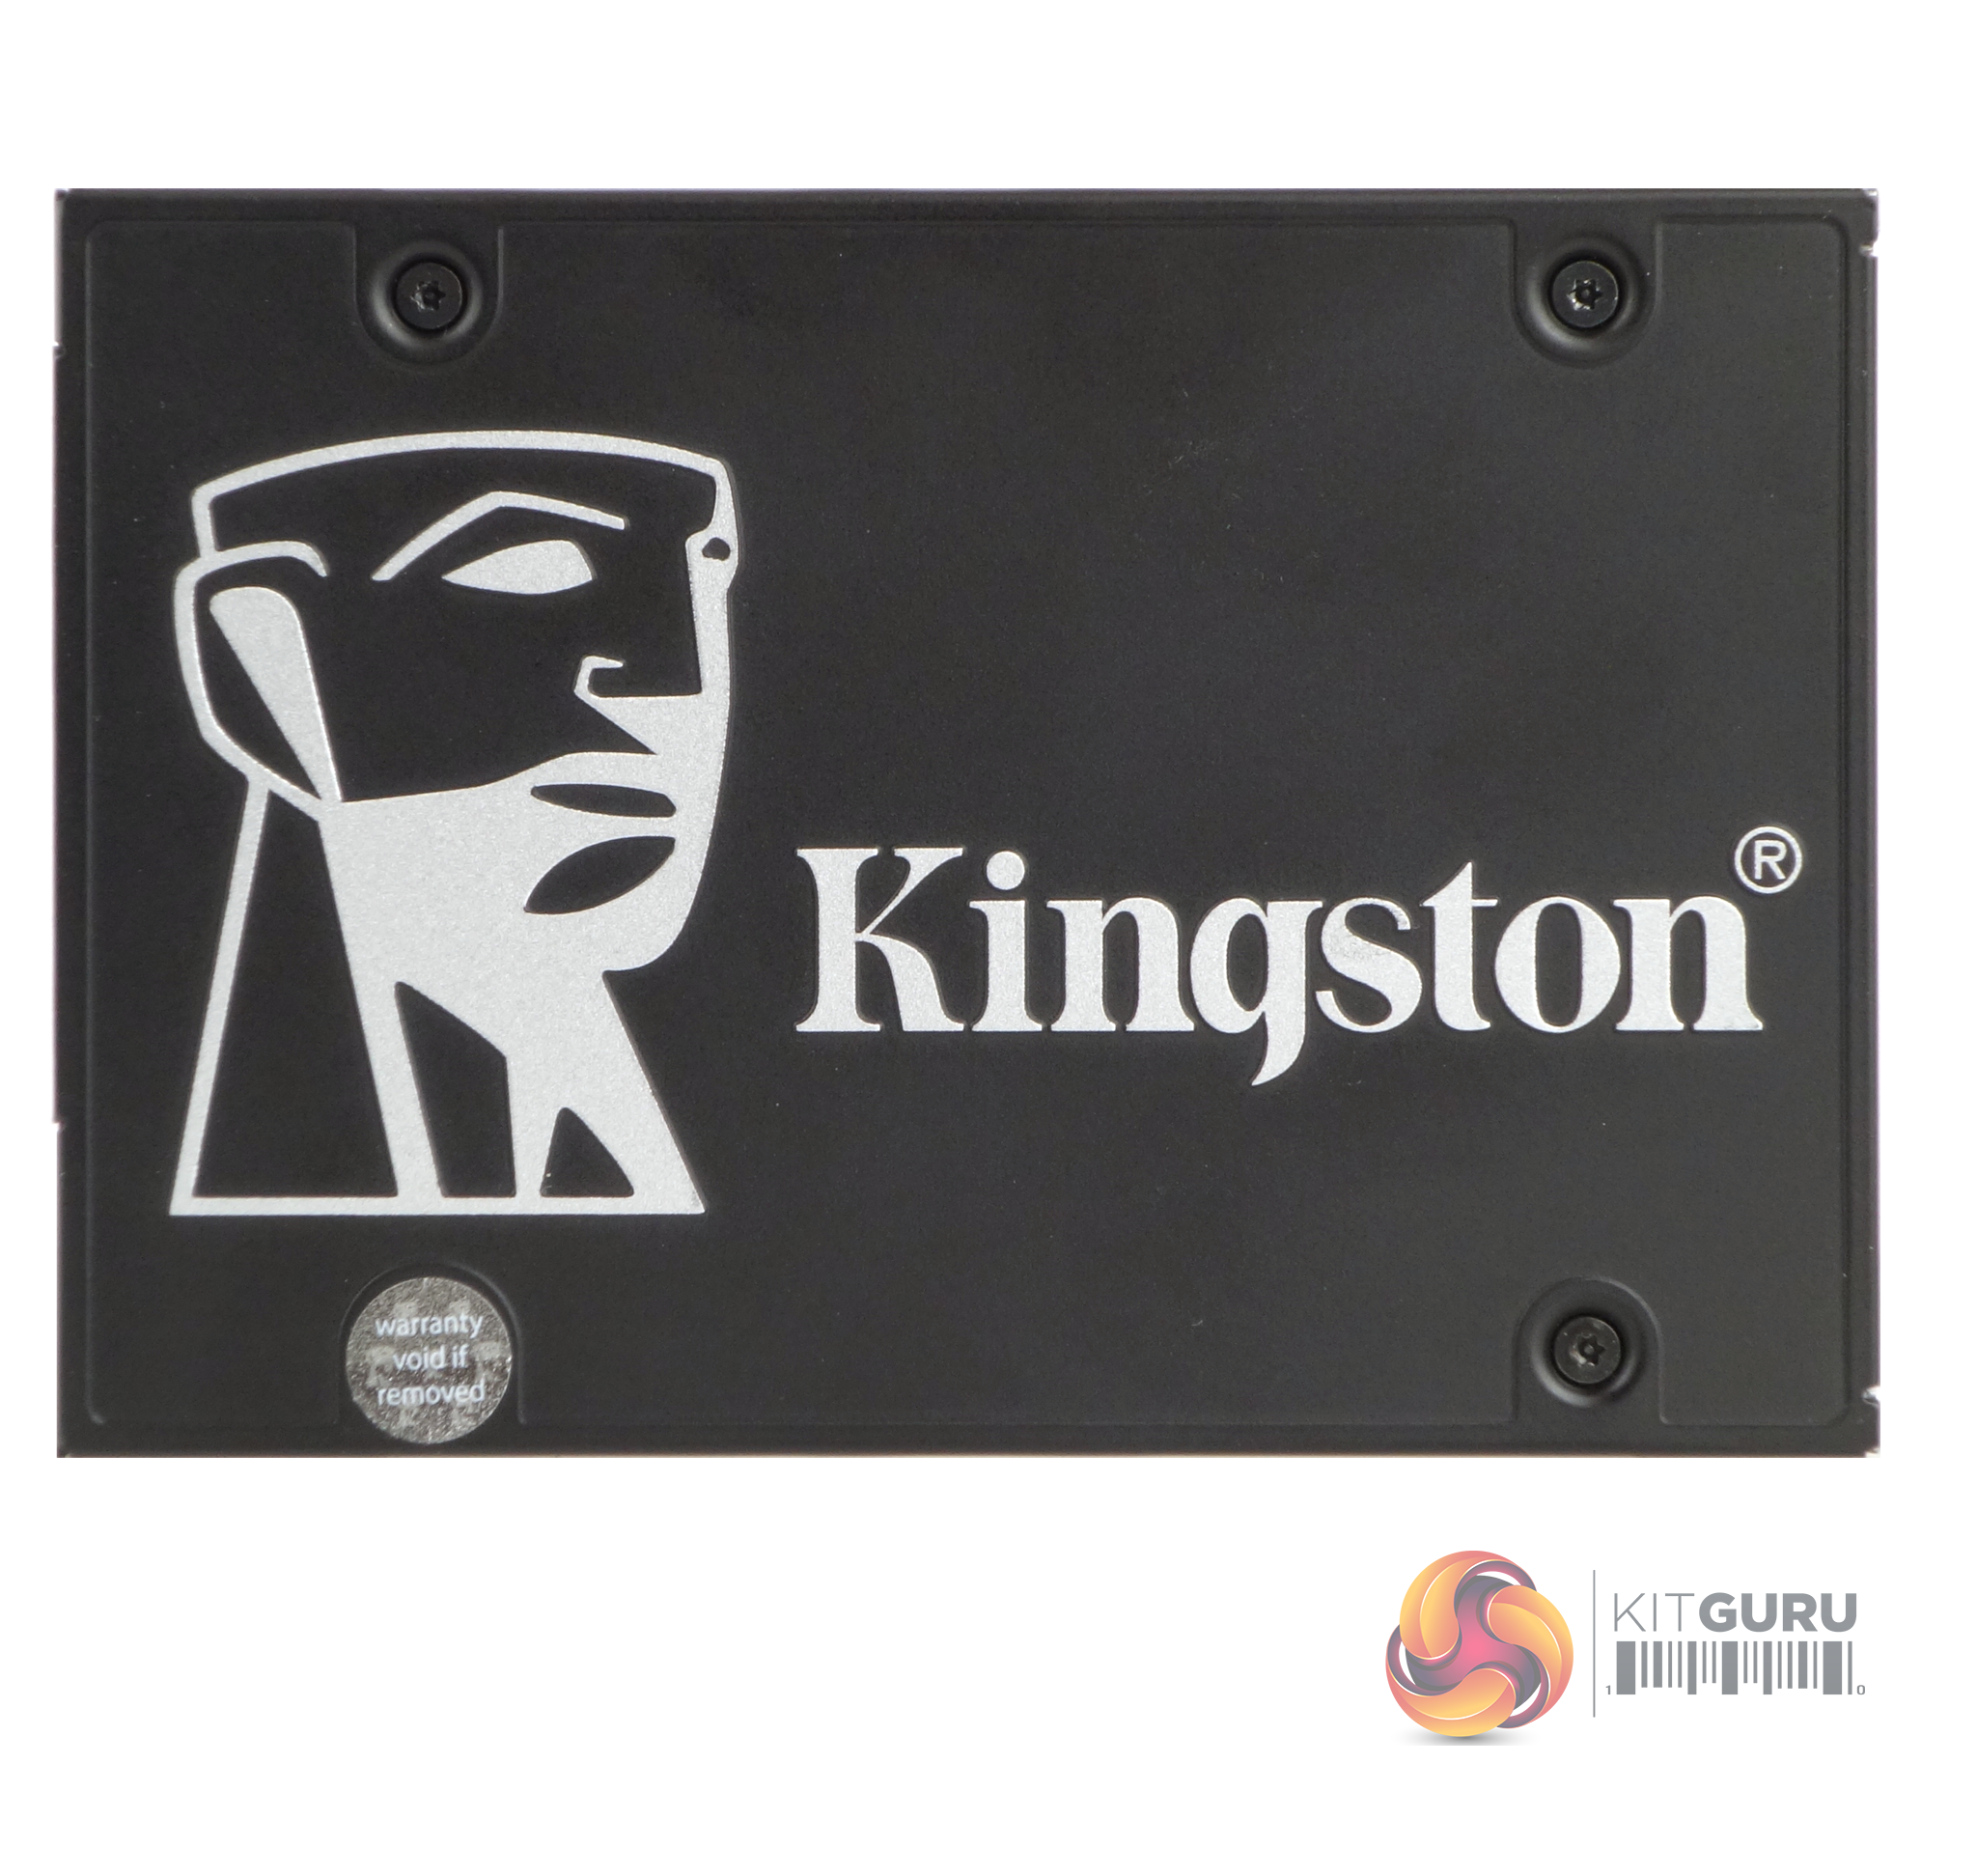 kingston trim utility for ssd